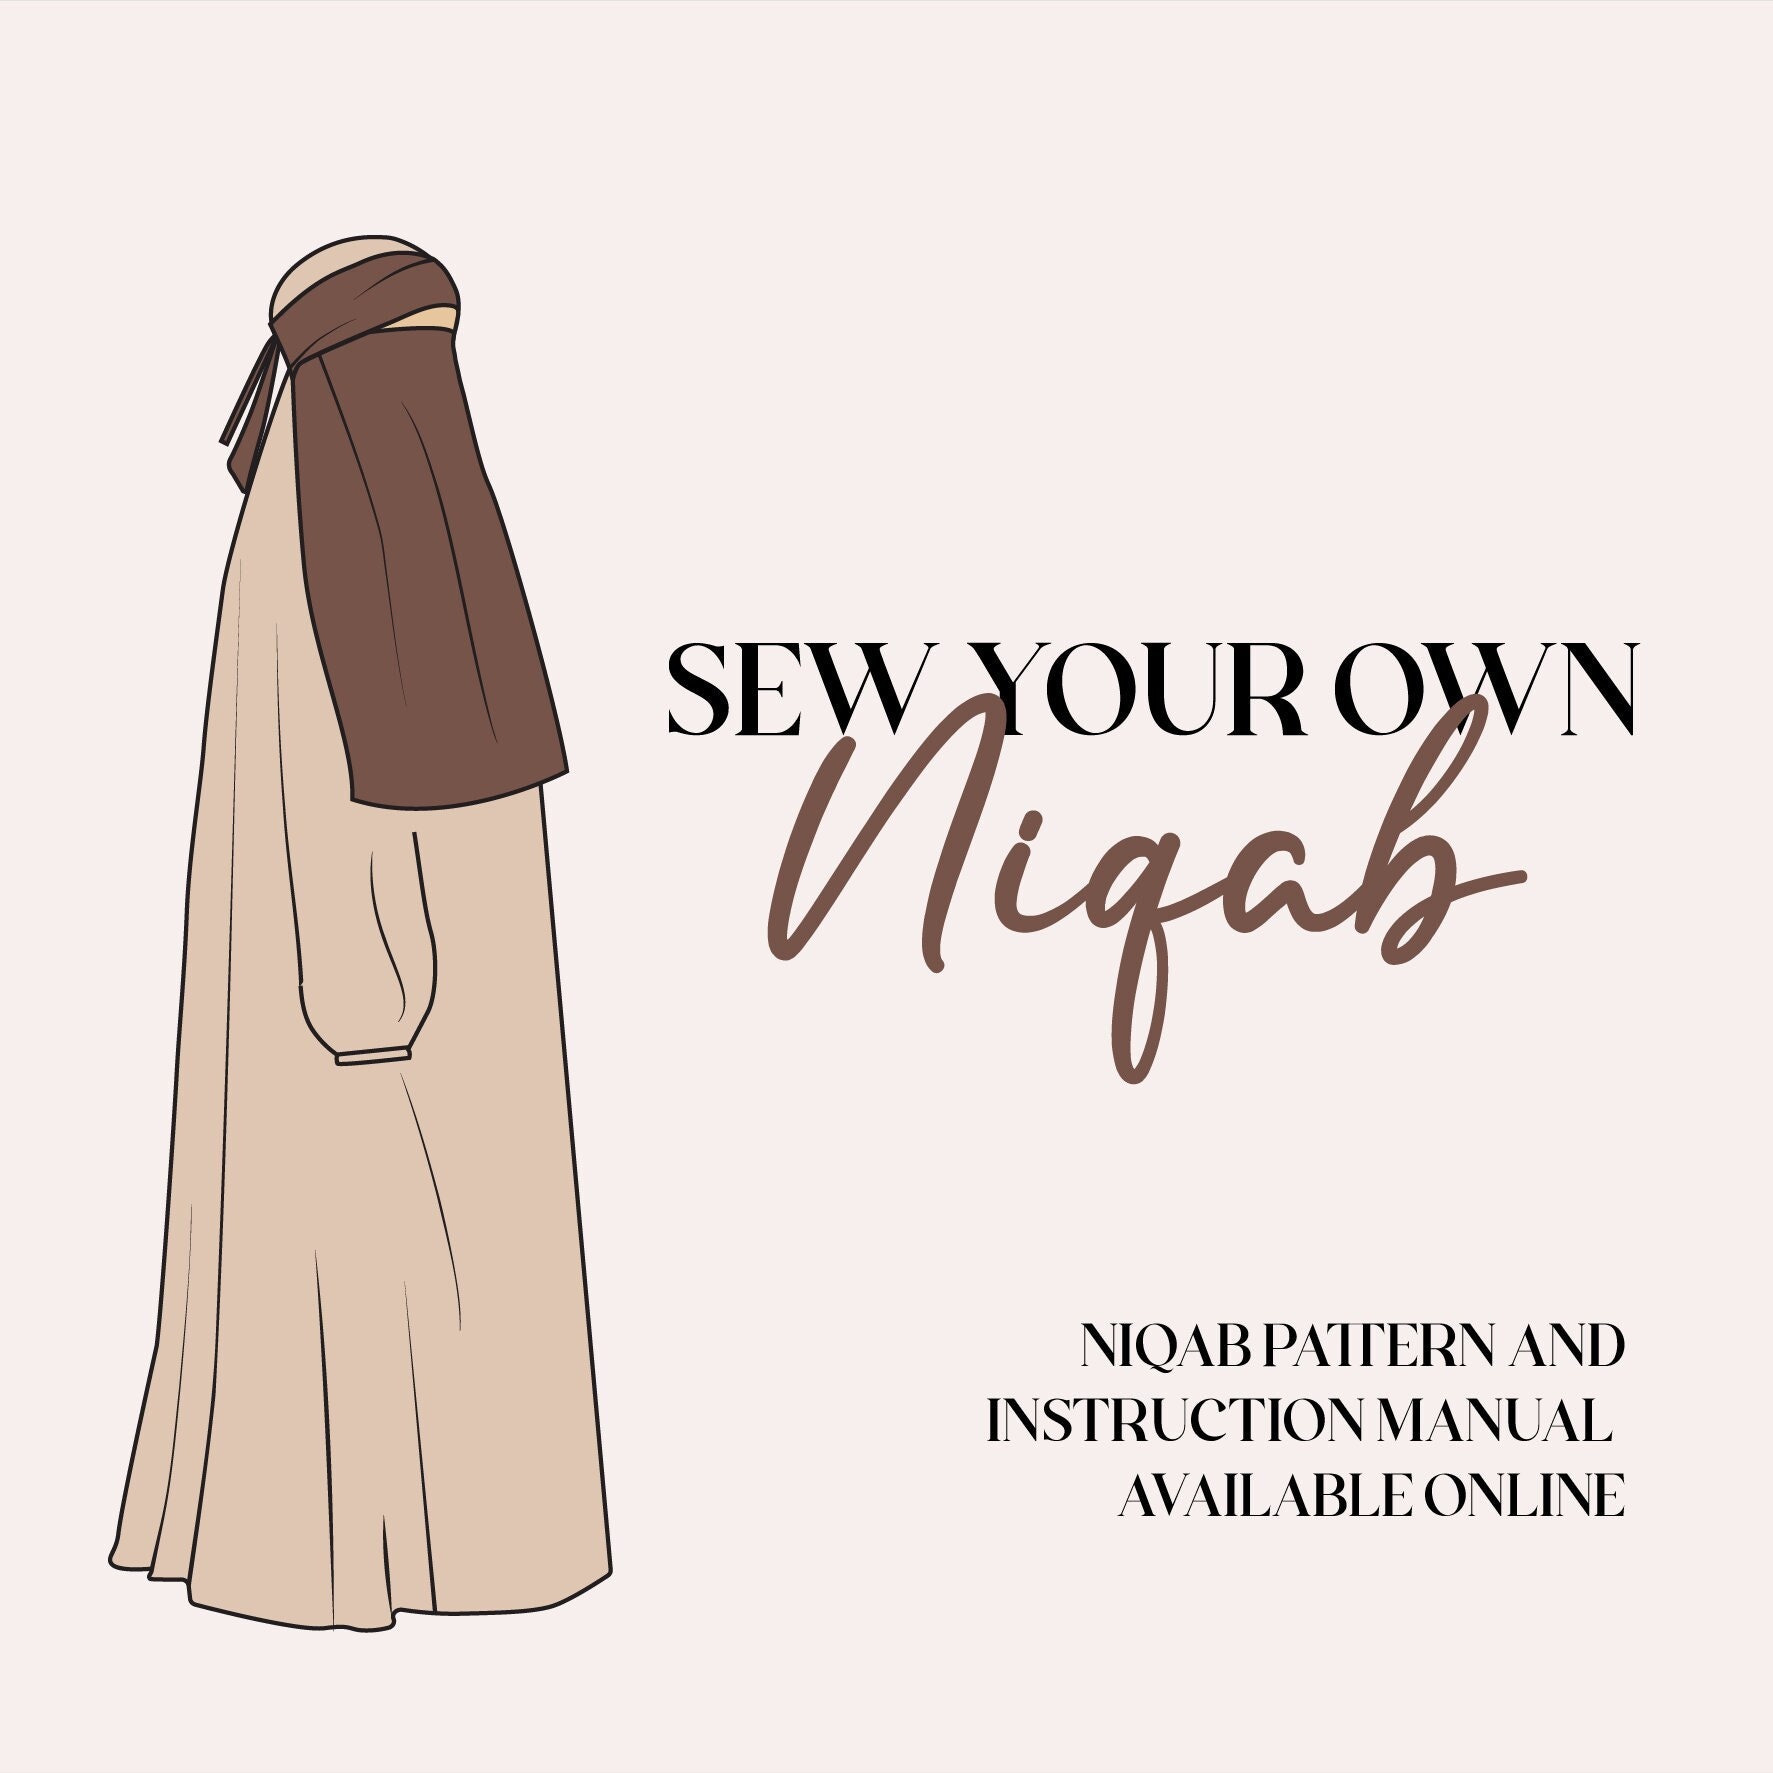 Single Layer Niqab Sewing Template PDF Niqab Sewing pic pic